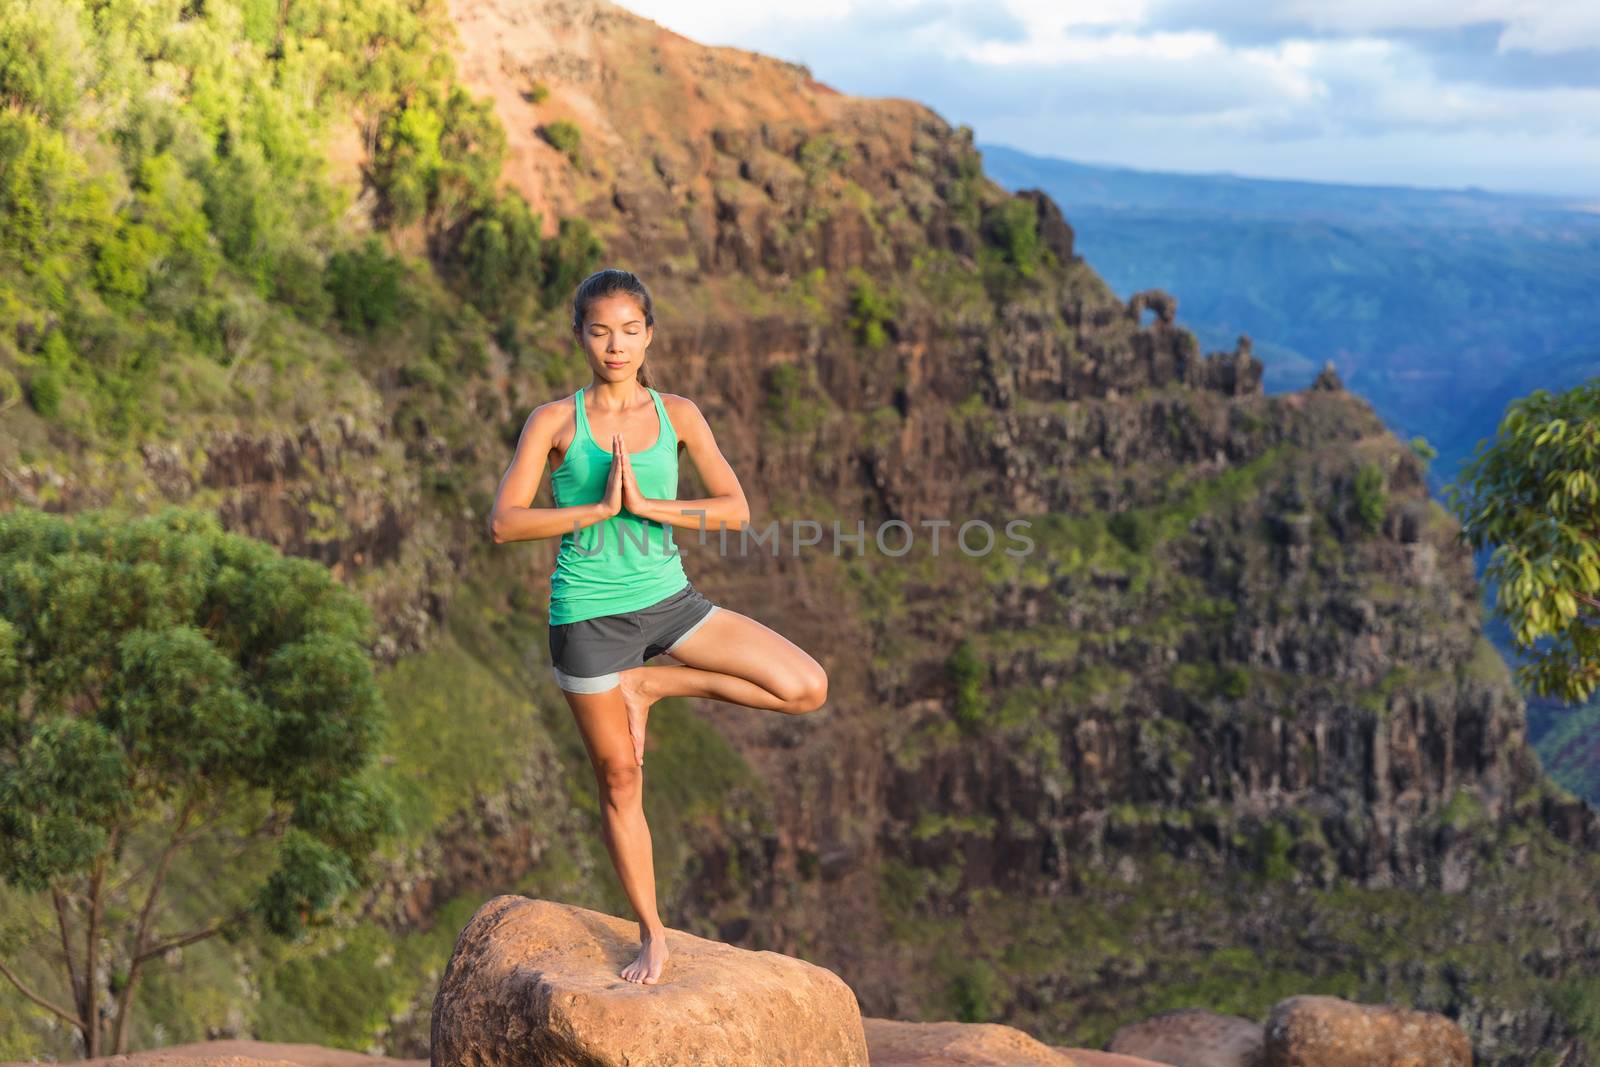 Yoga meditation - woman meditating doing yoga tree pose on Kauai, Hawaii, USA. Serene relaxing girl in amazing nature landscape in Waimea Canyon.